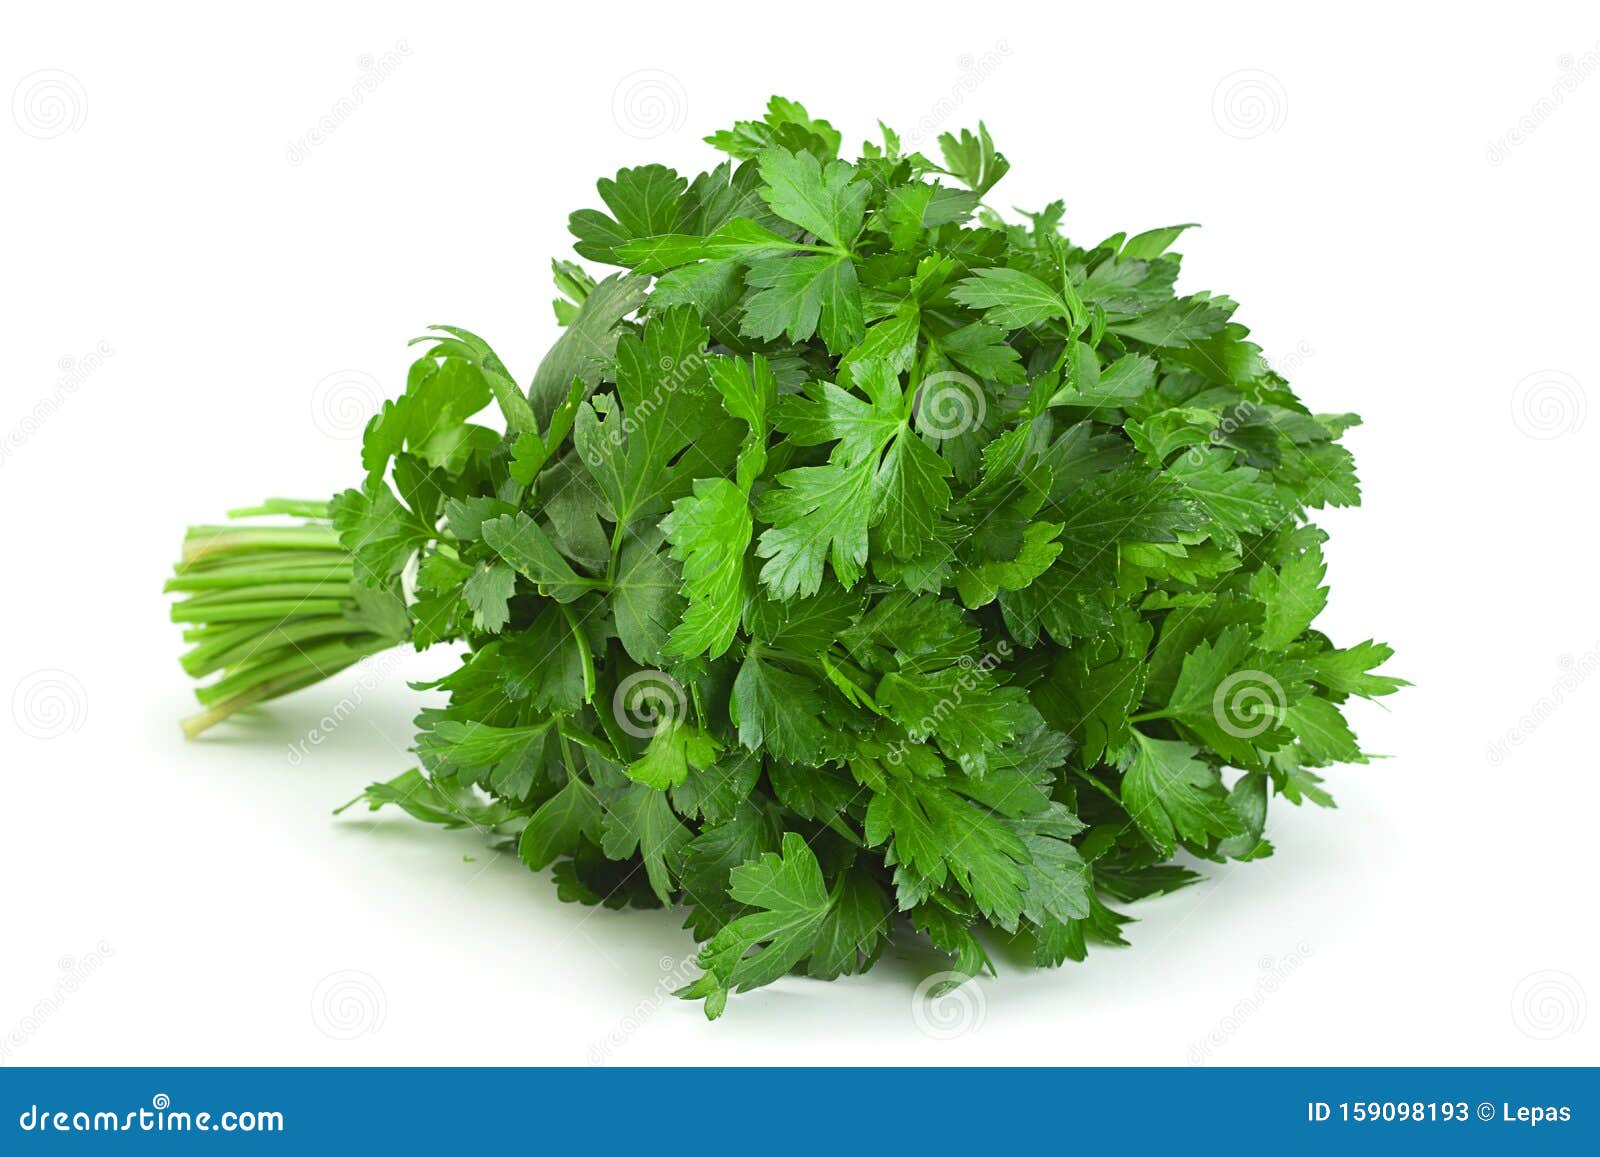 parsley herb bunch